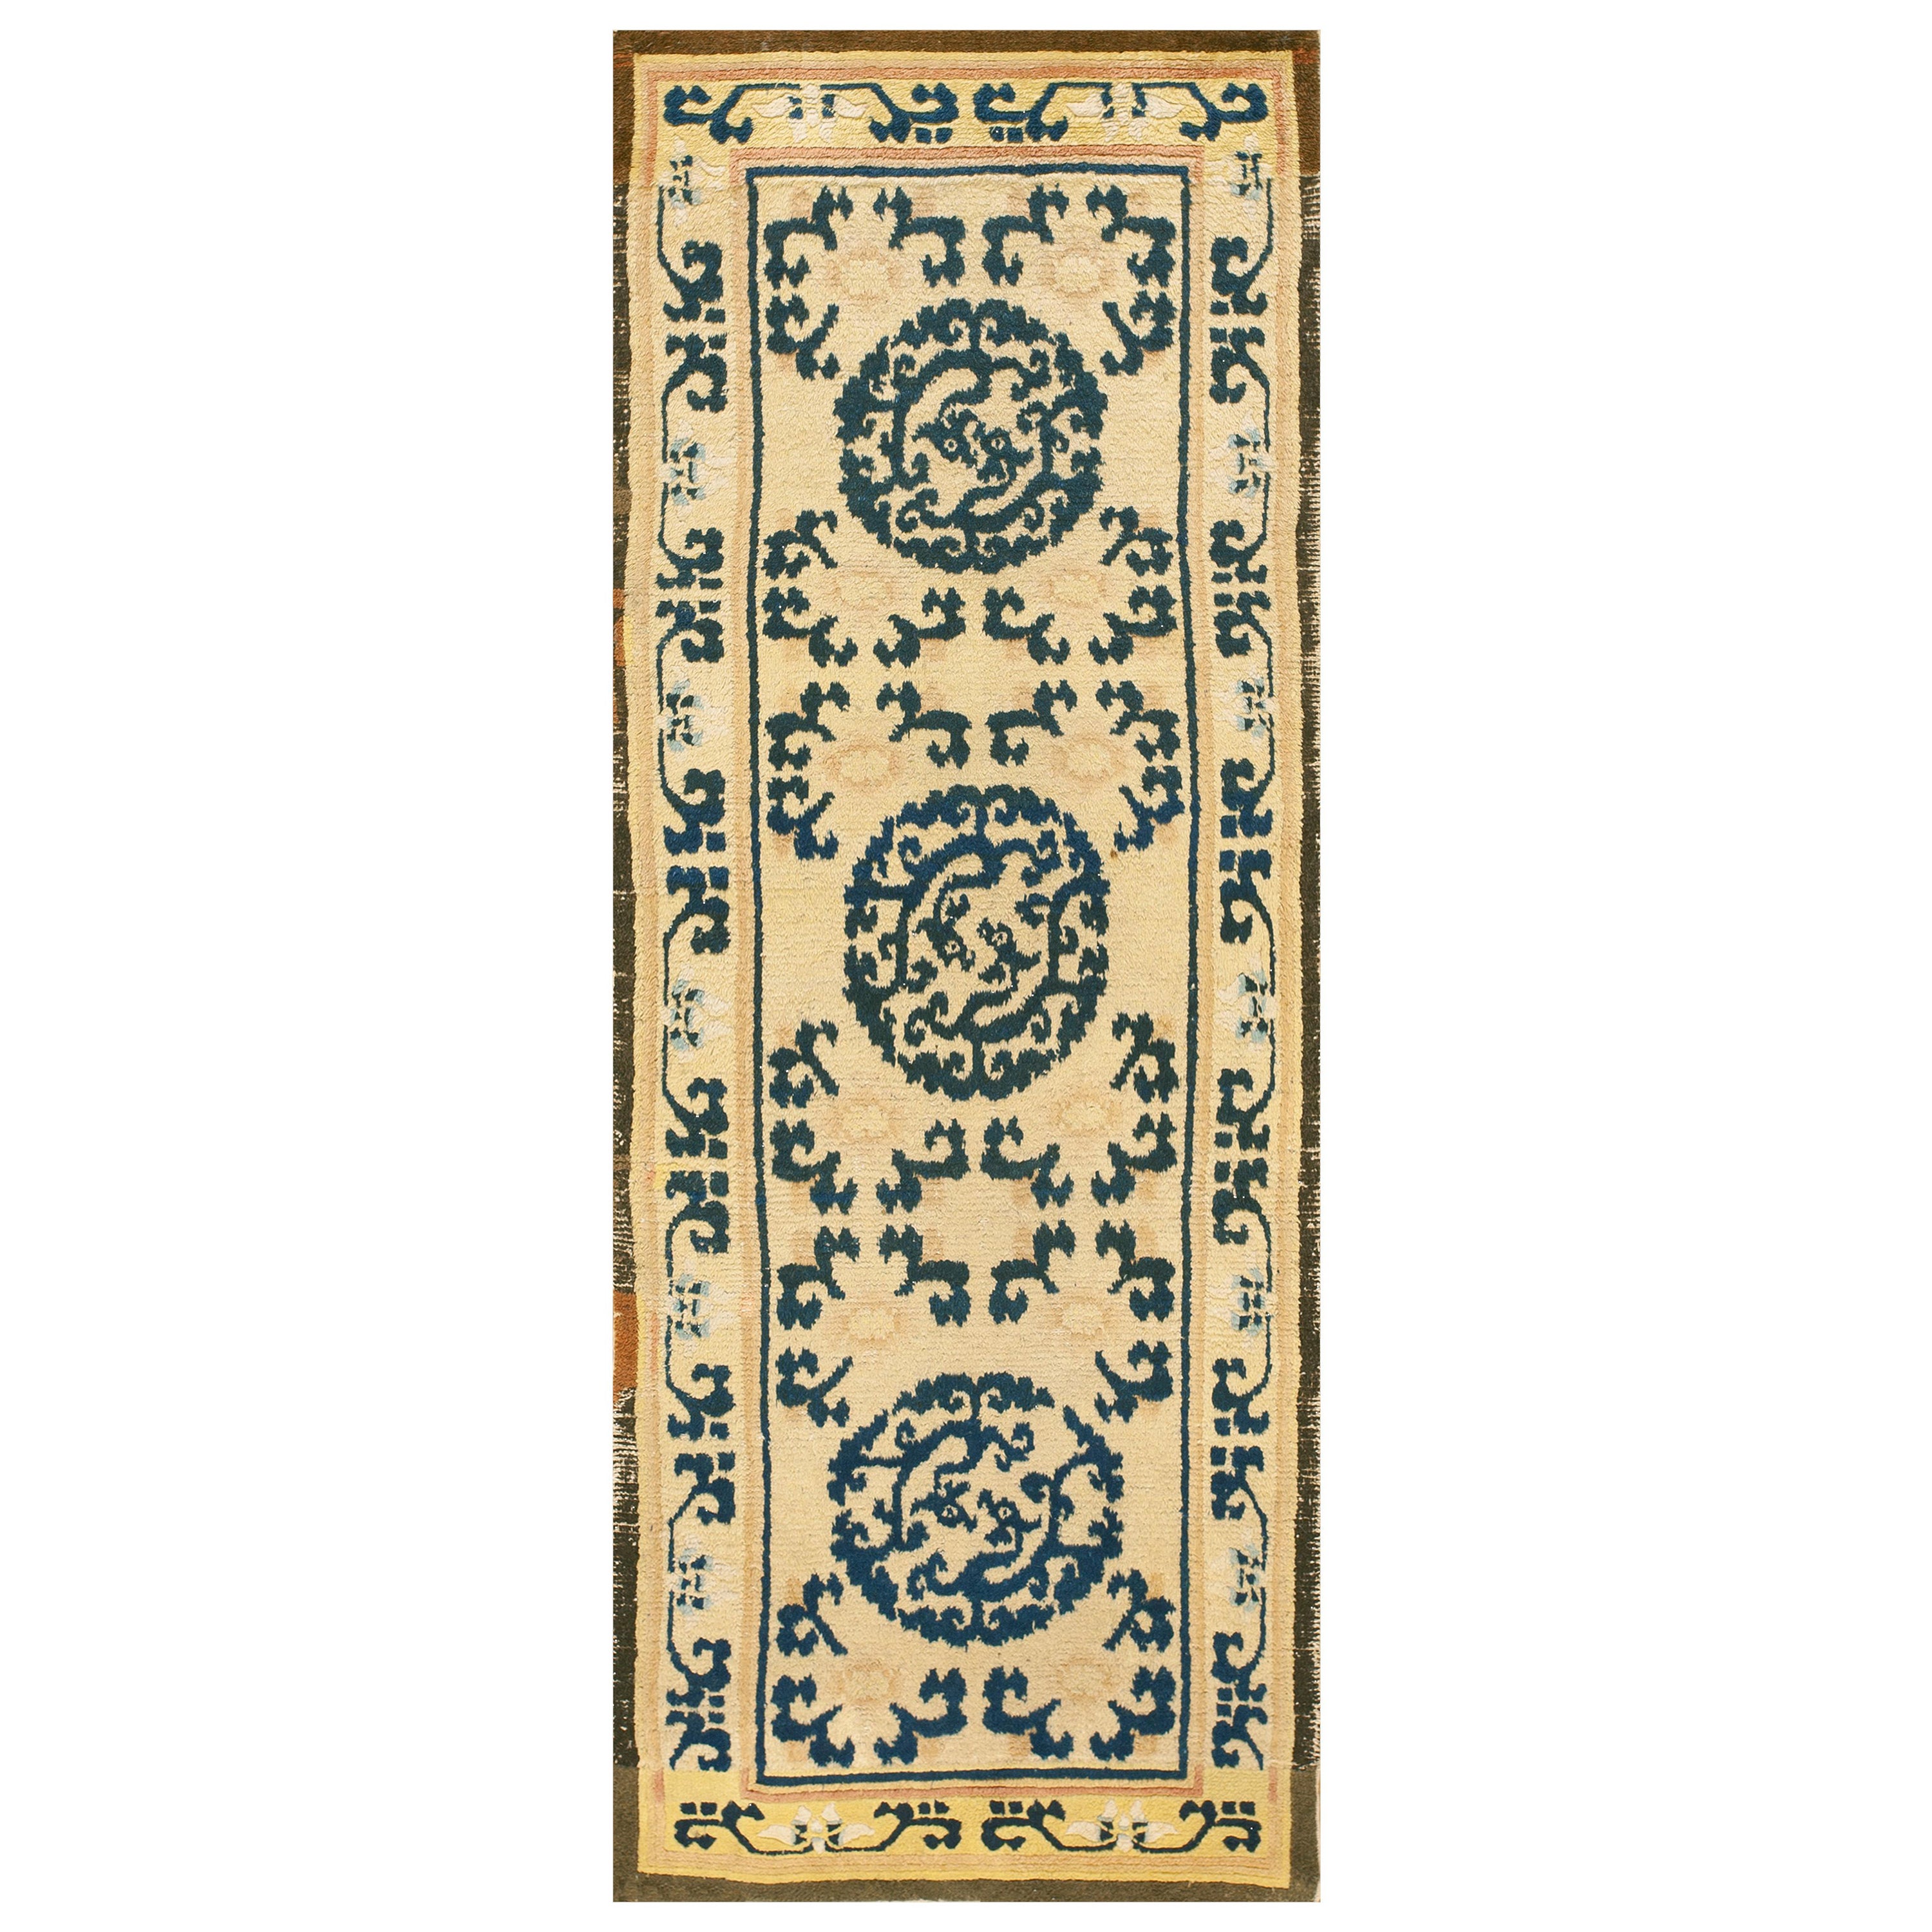 18th Century Chinese Ningxia Carpet ( 2'9" x 7' - 85 x 215 cm )